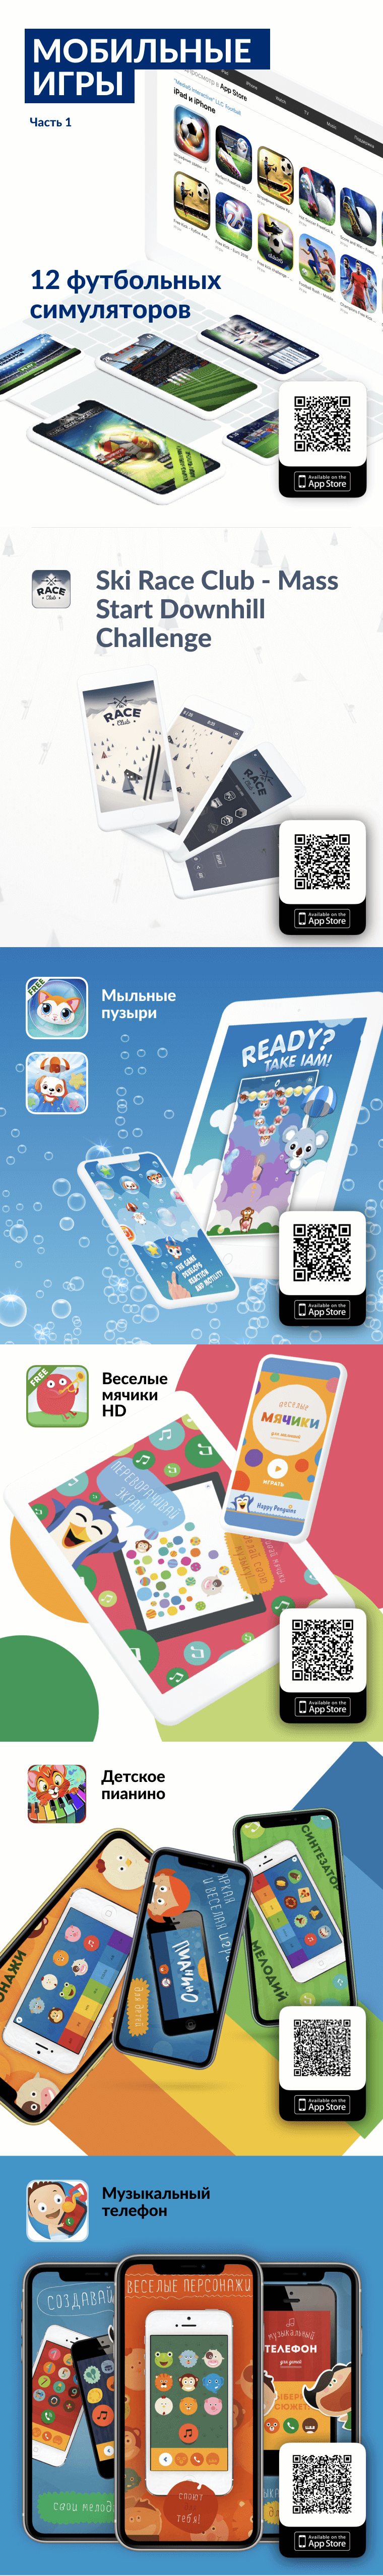 Эскиз проекта Mobile games for kids